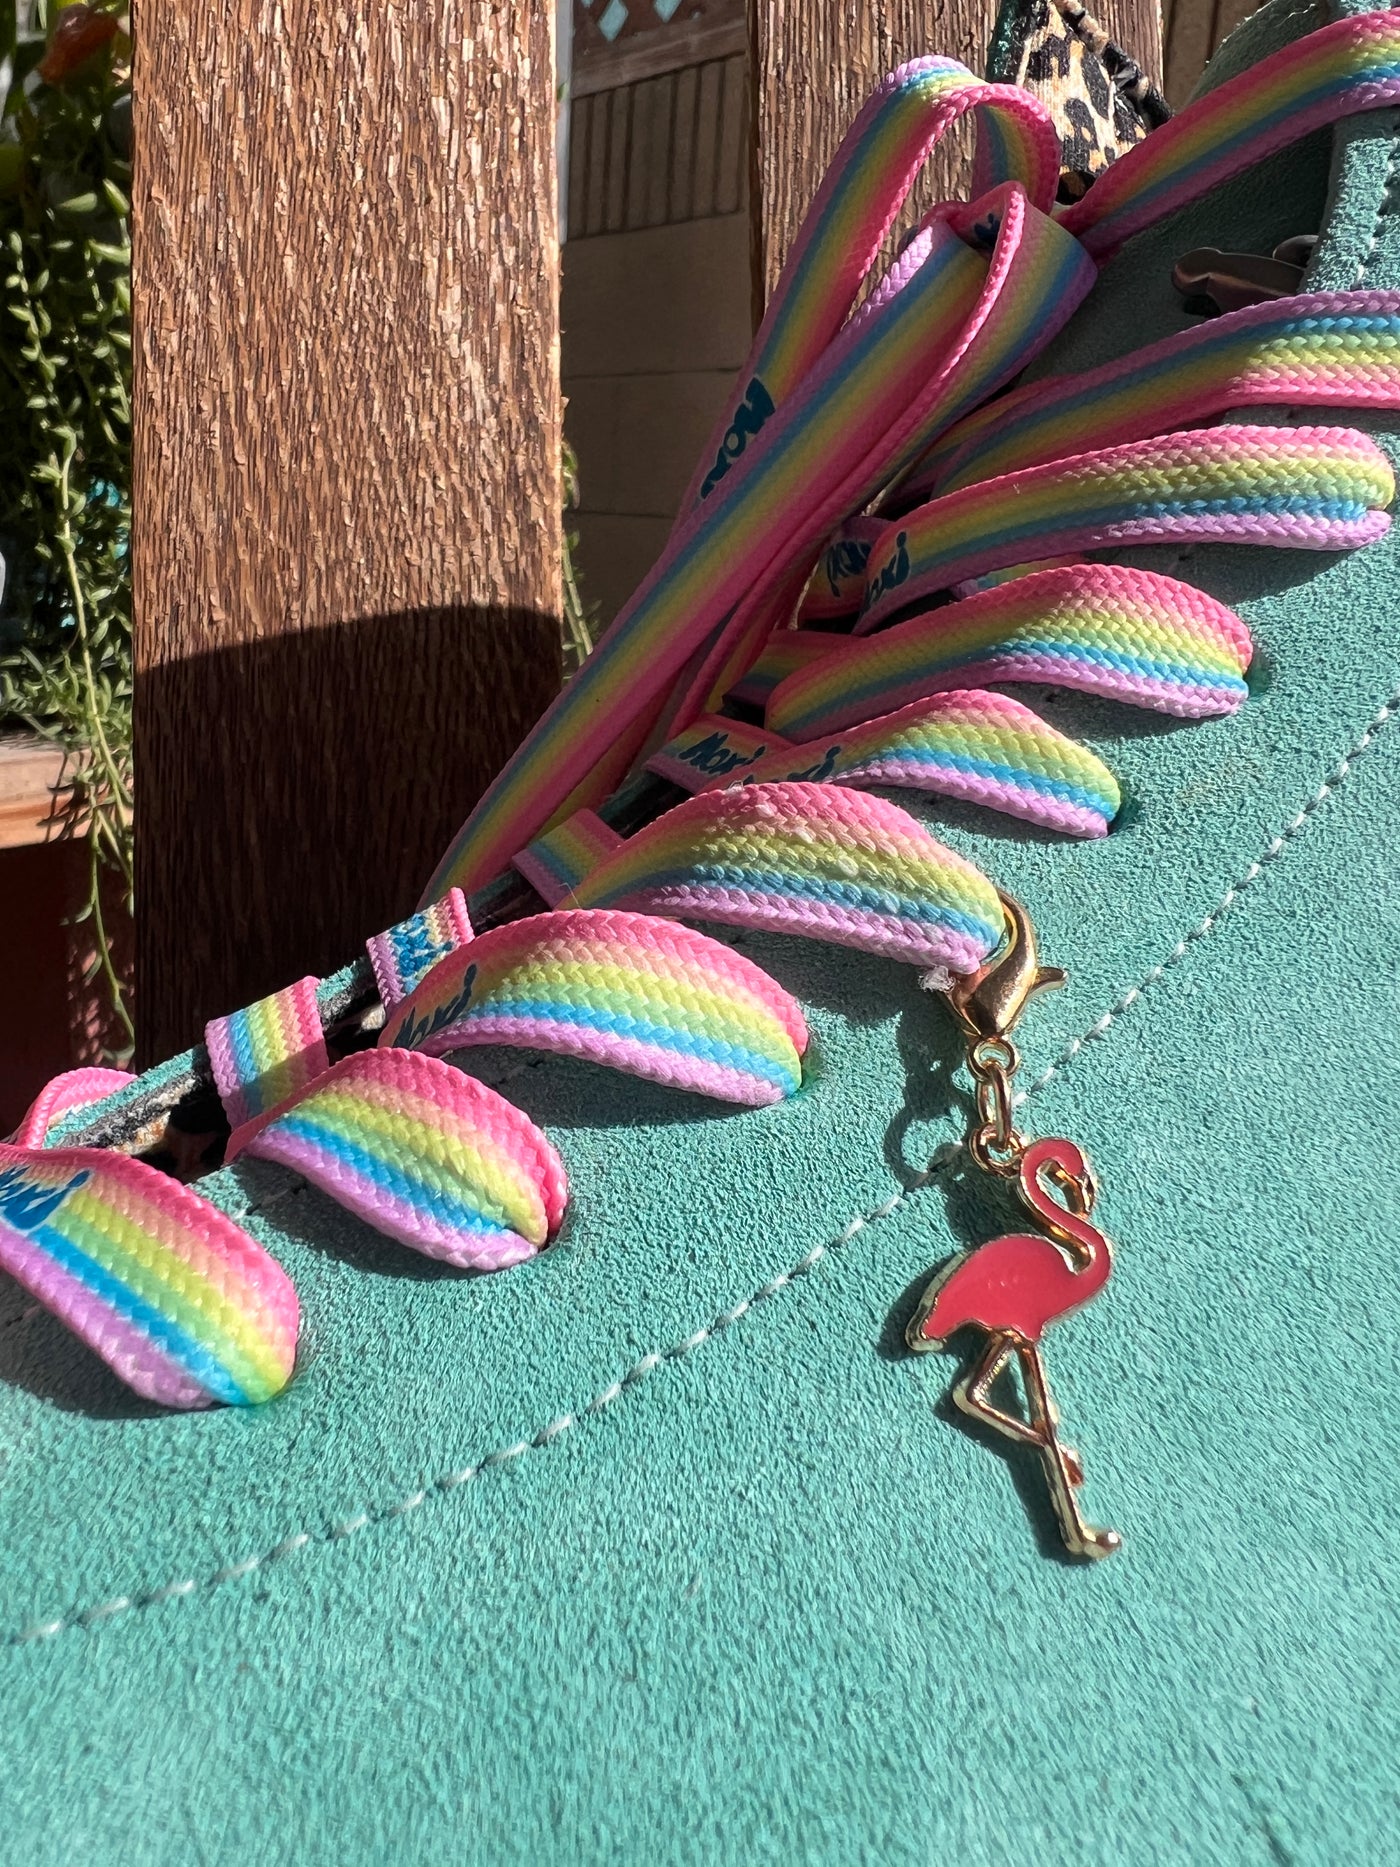 Gold and Pink Flamingo Skate Charm - Shoe Charm, Zipper Pull, Bag Charm